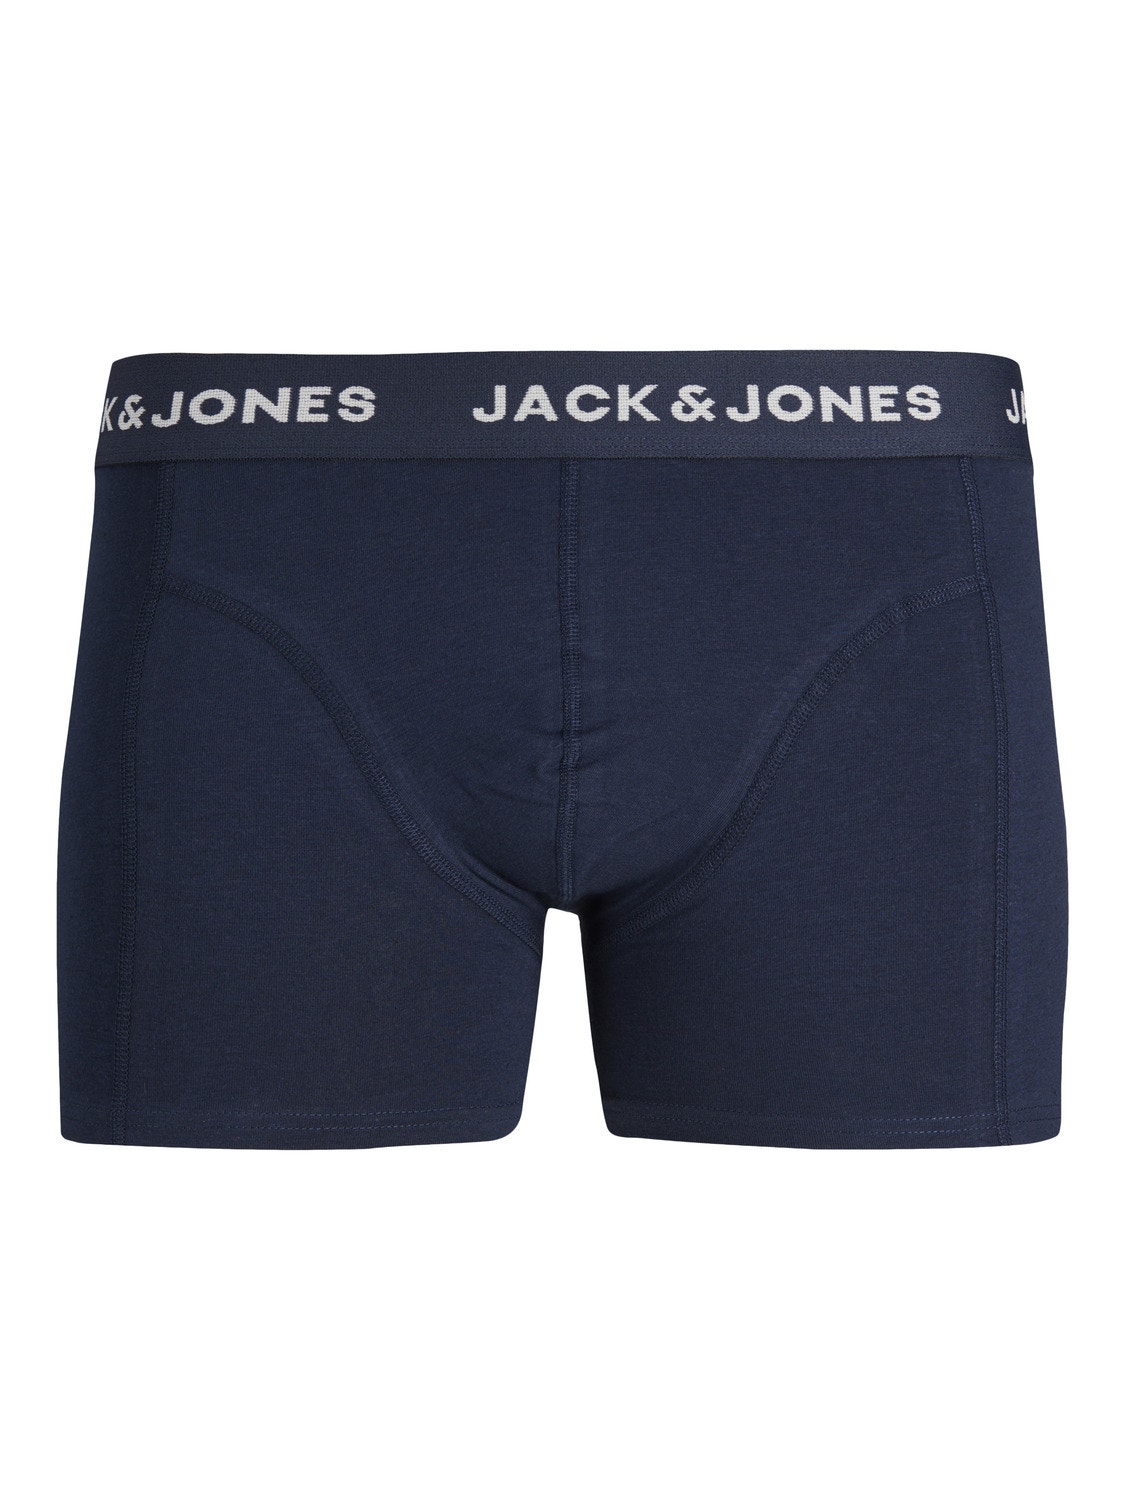 Jack & Jones 3 Trunks Junior -Navy Blazer - 12253231